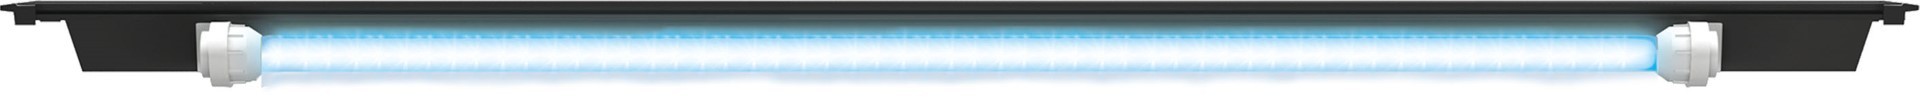 Juwel balk LED 100 cm 2x23 Watt inclusief lamp